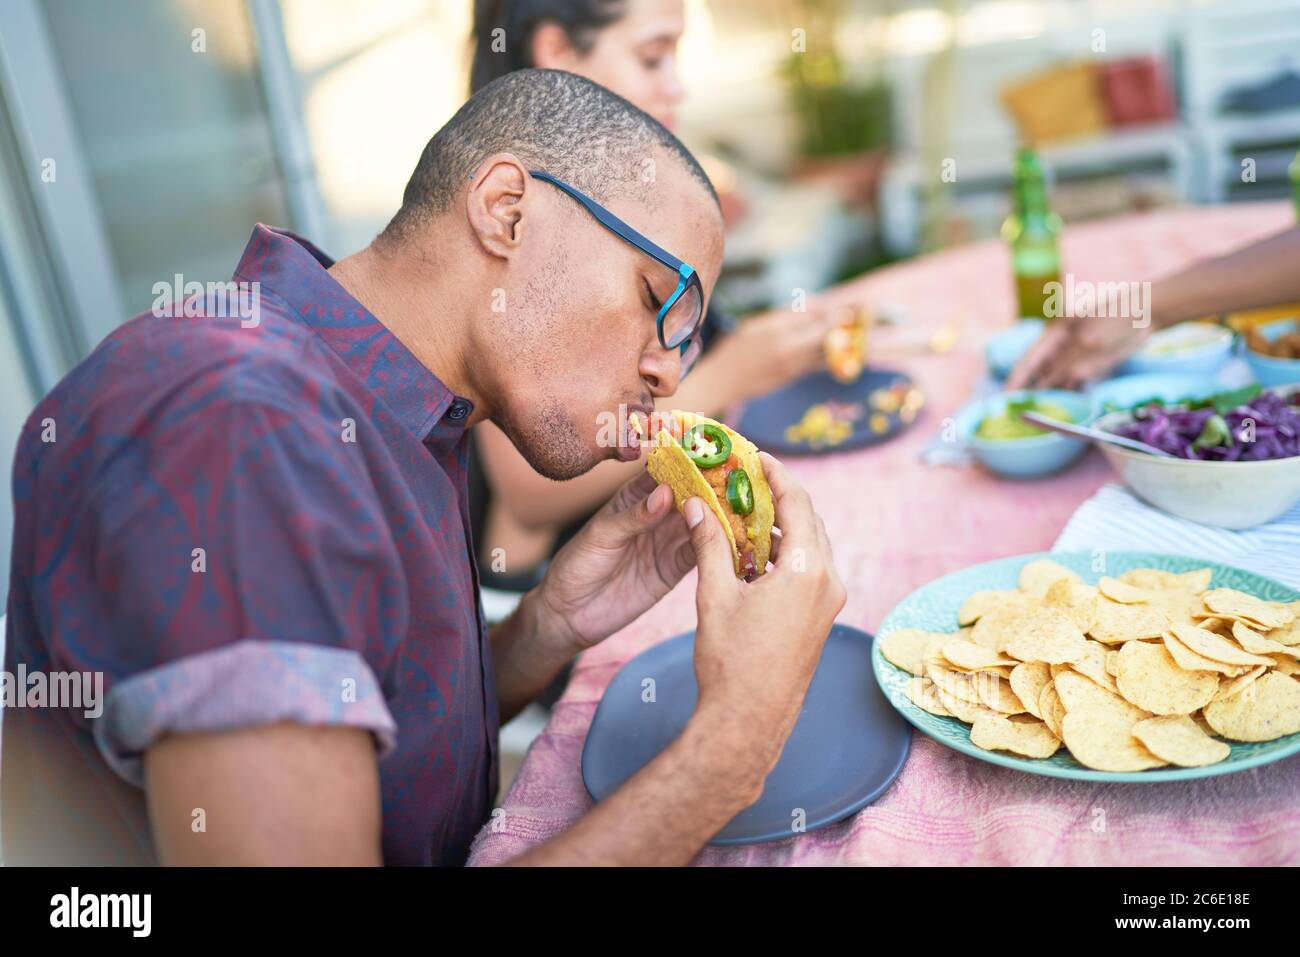 Young man eating taco at patio table Stock Photo